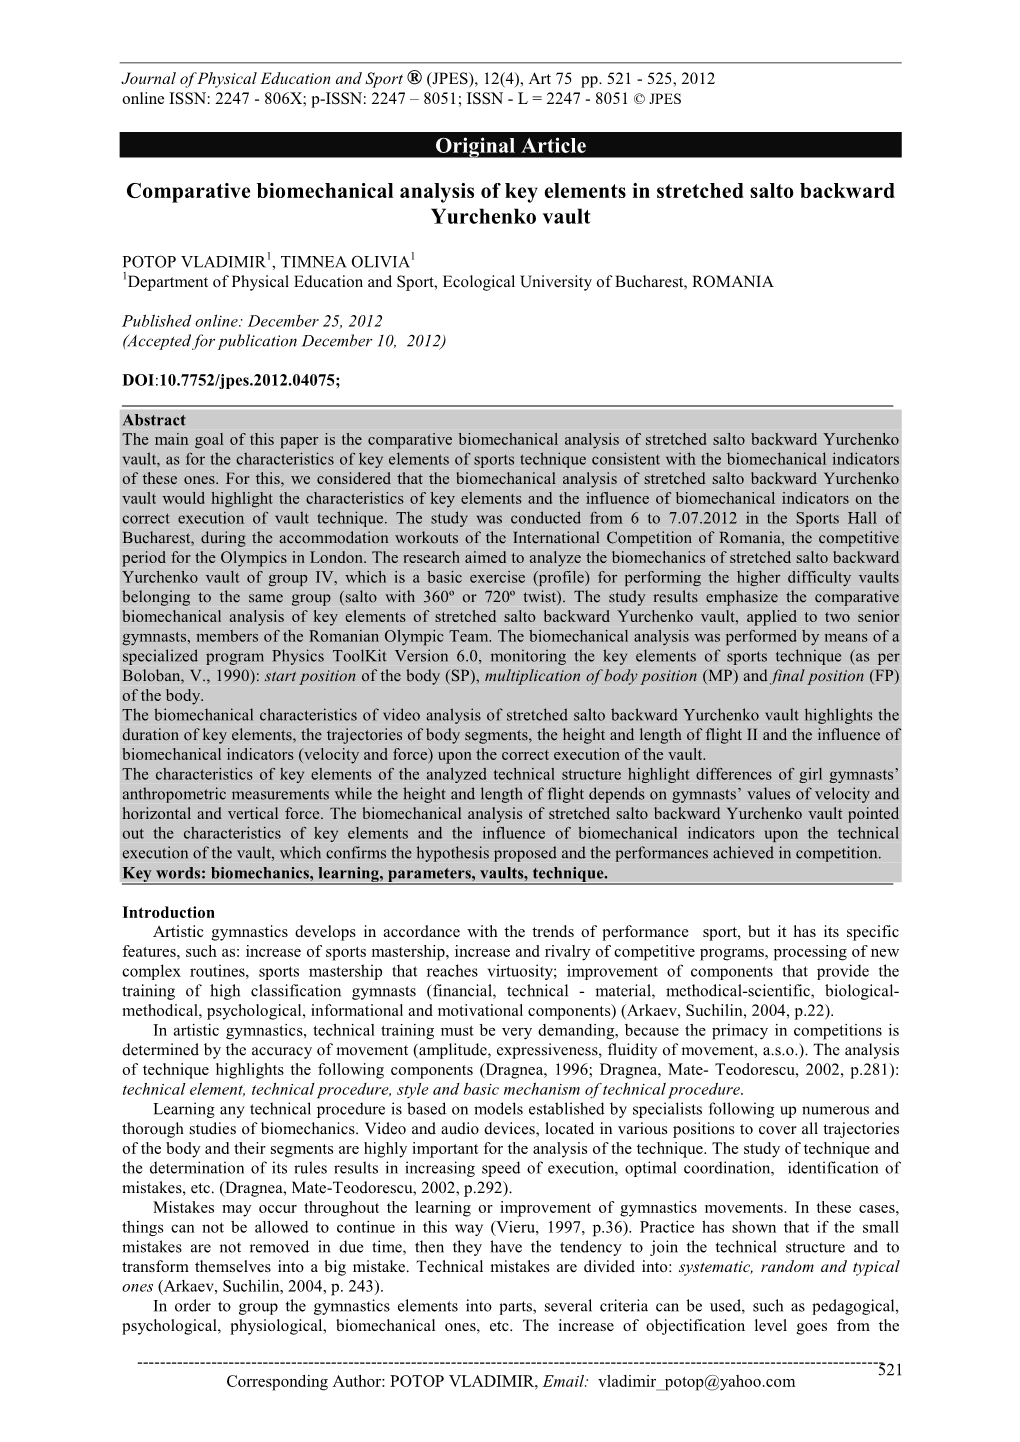 Original Article Comparative Biomechanical Analysis of Key Elements in Stretched Salto Backward Yurchenko Vault